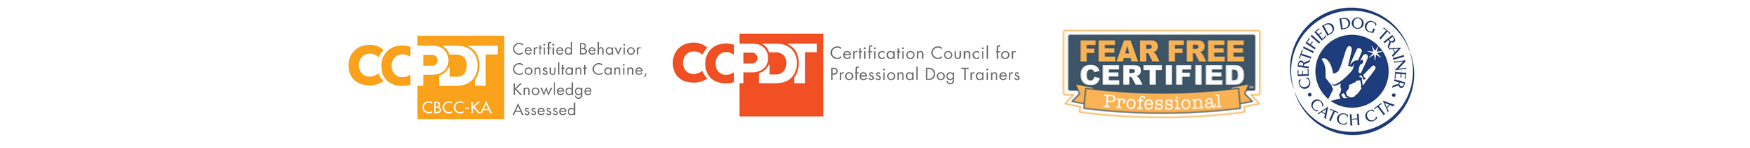 CCPDT CBCC-KA Fear Free Catch CTA Certified Dog Trainer